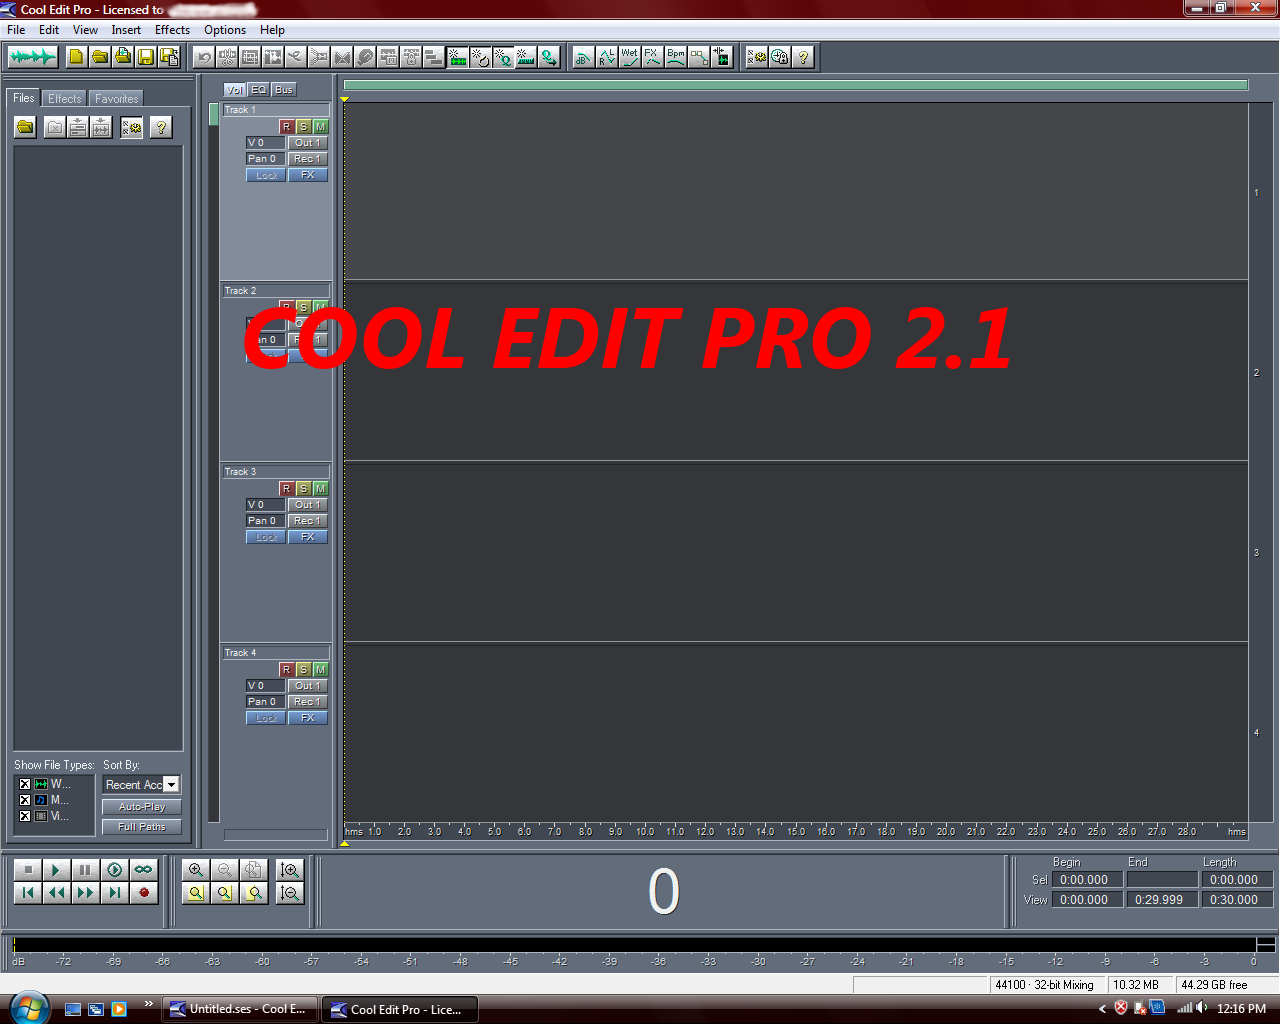 register cool edit pro 2.1 download full version free